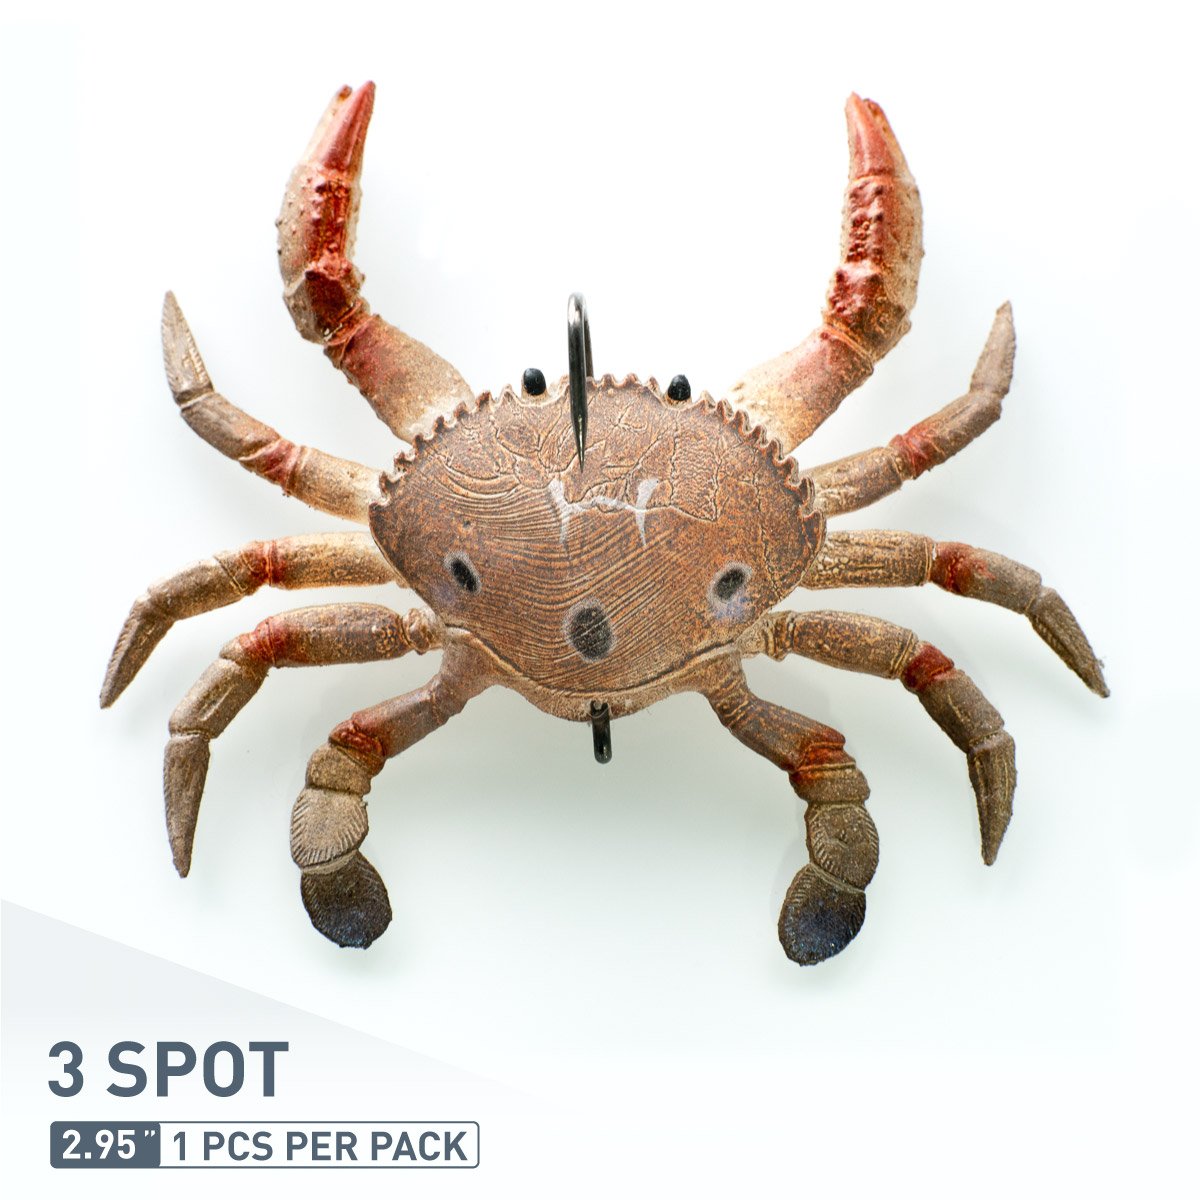 Chasebaits Smash Crab, 3 Spot SC75-13